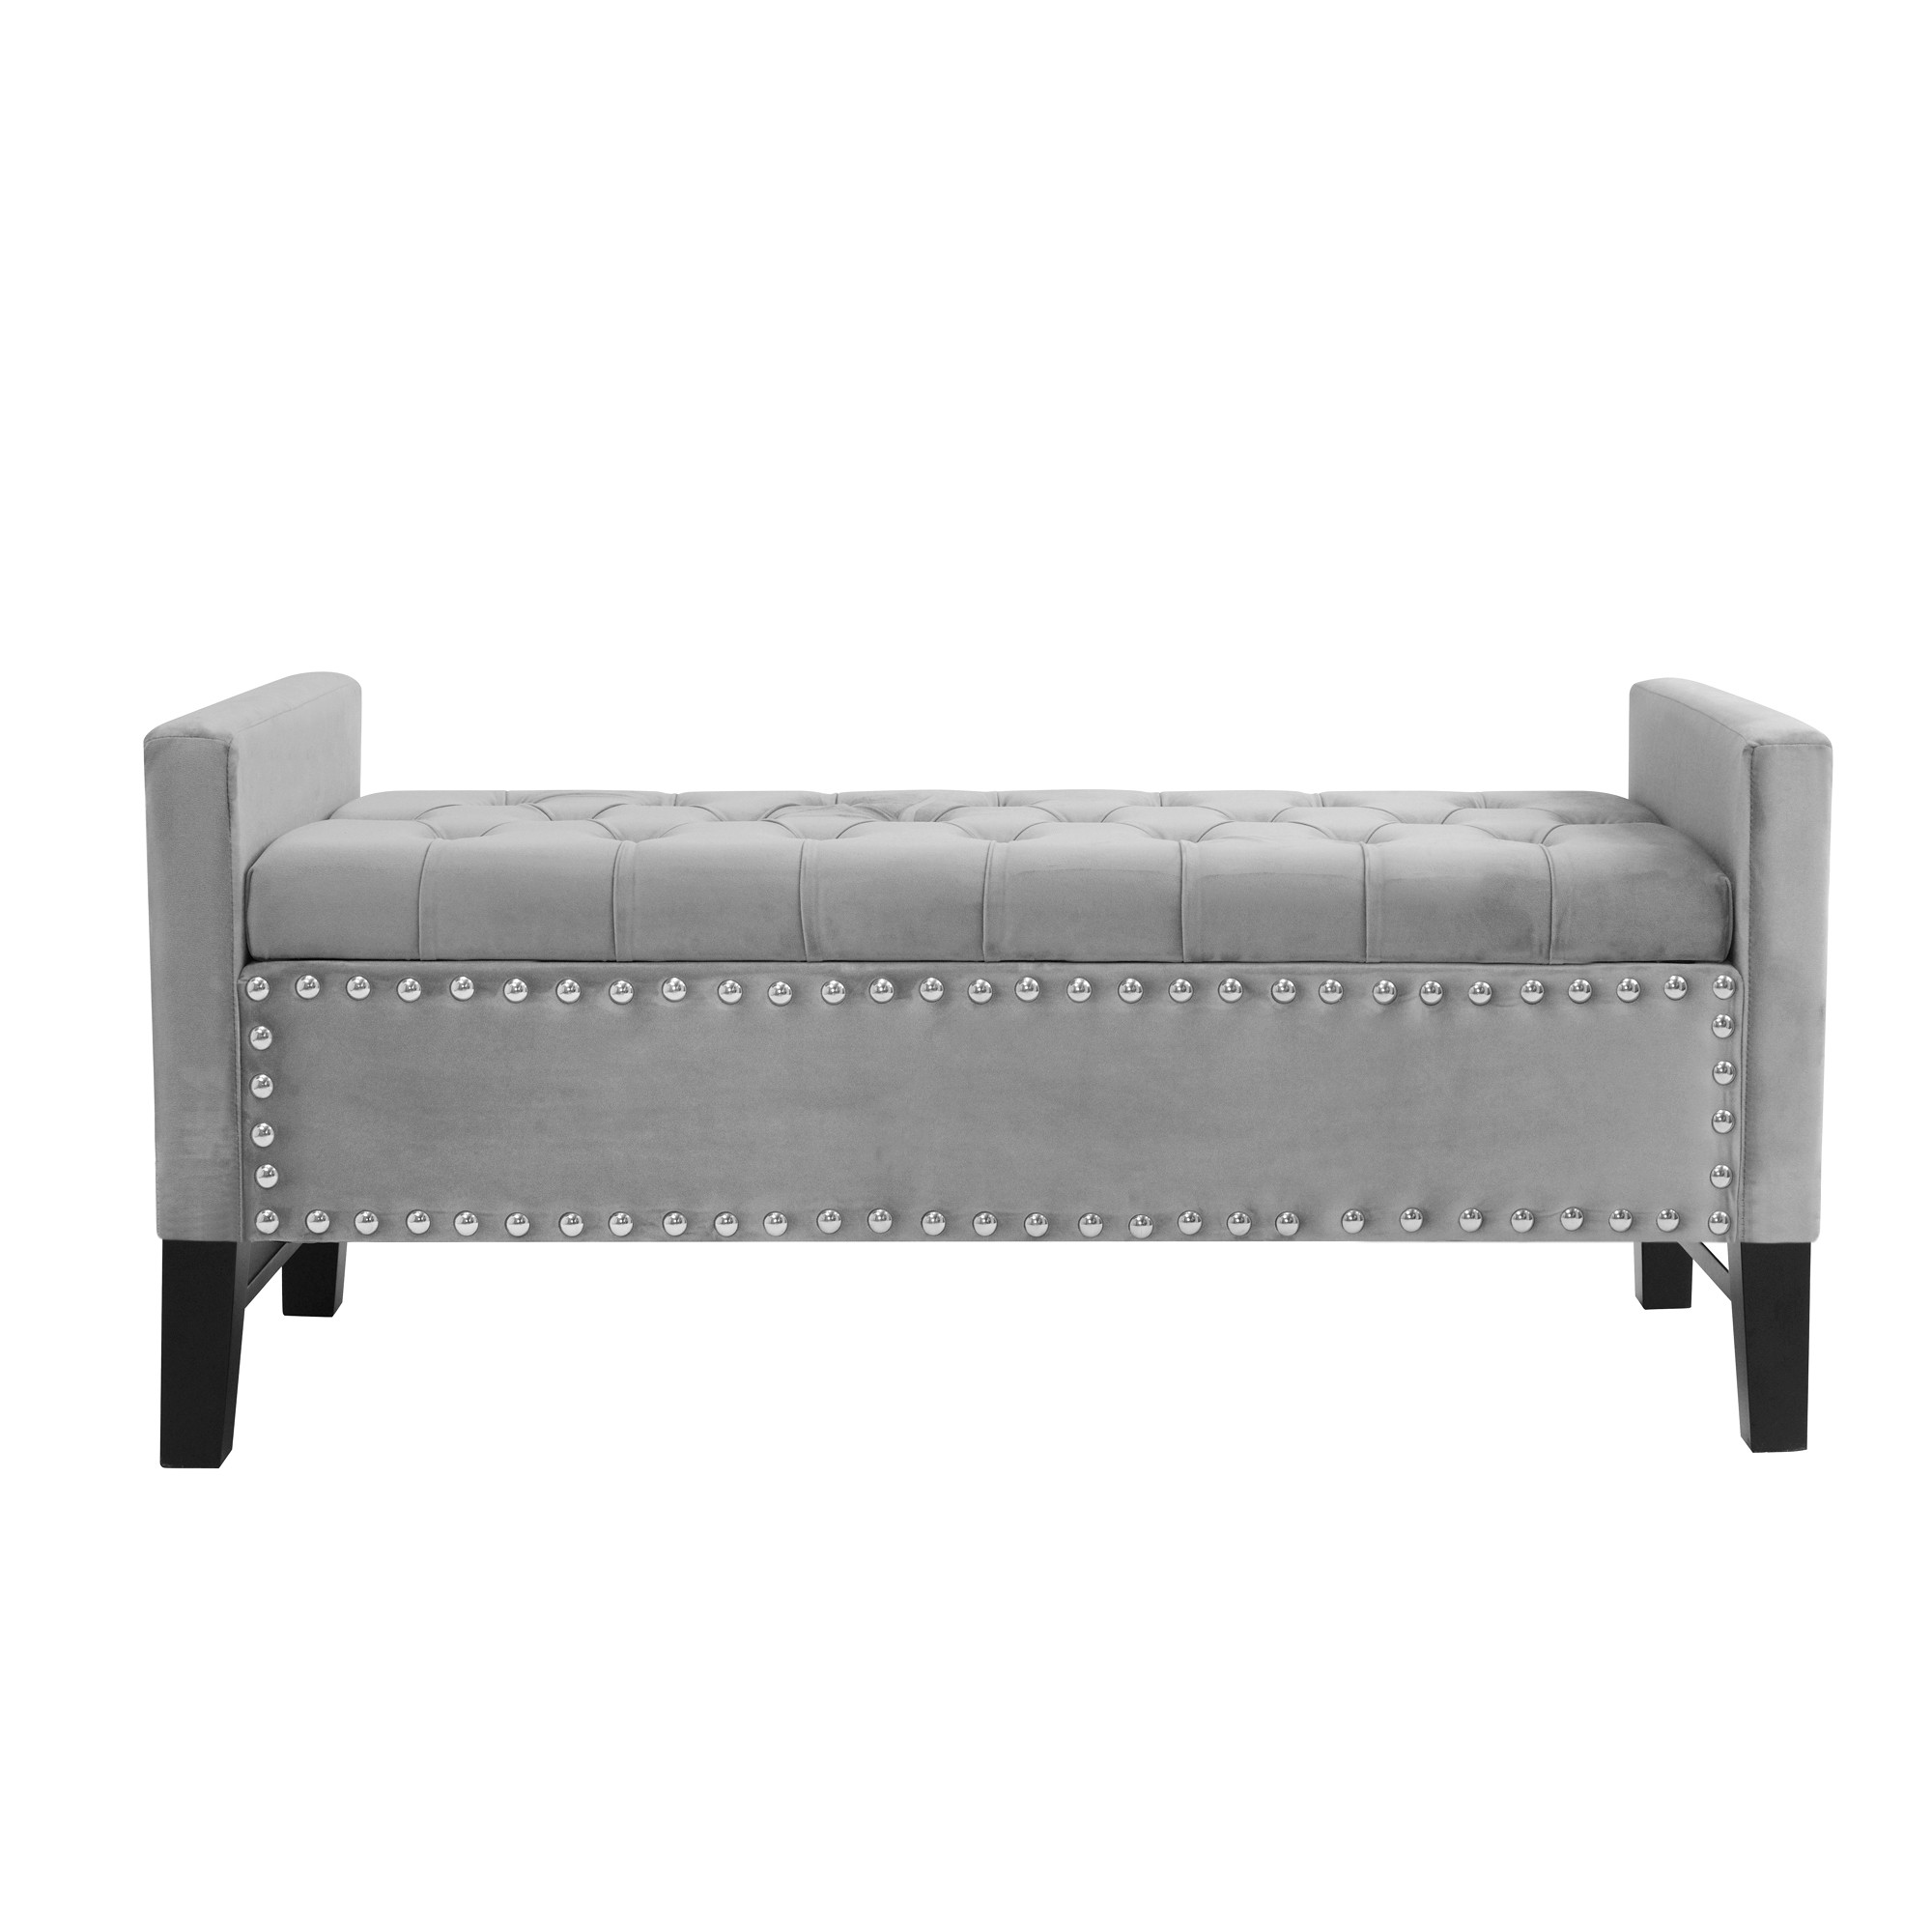 50" Light Gray and Black Upholstered Velvet Bench with Flip top, Shoe Storage-530655-1